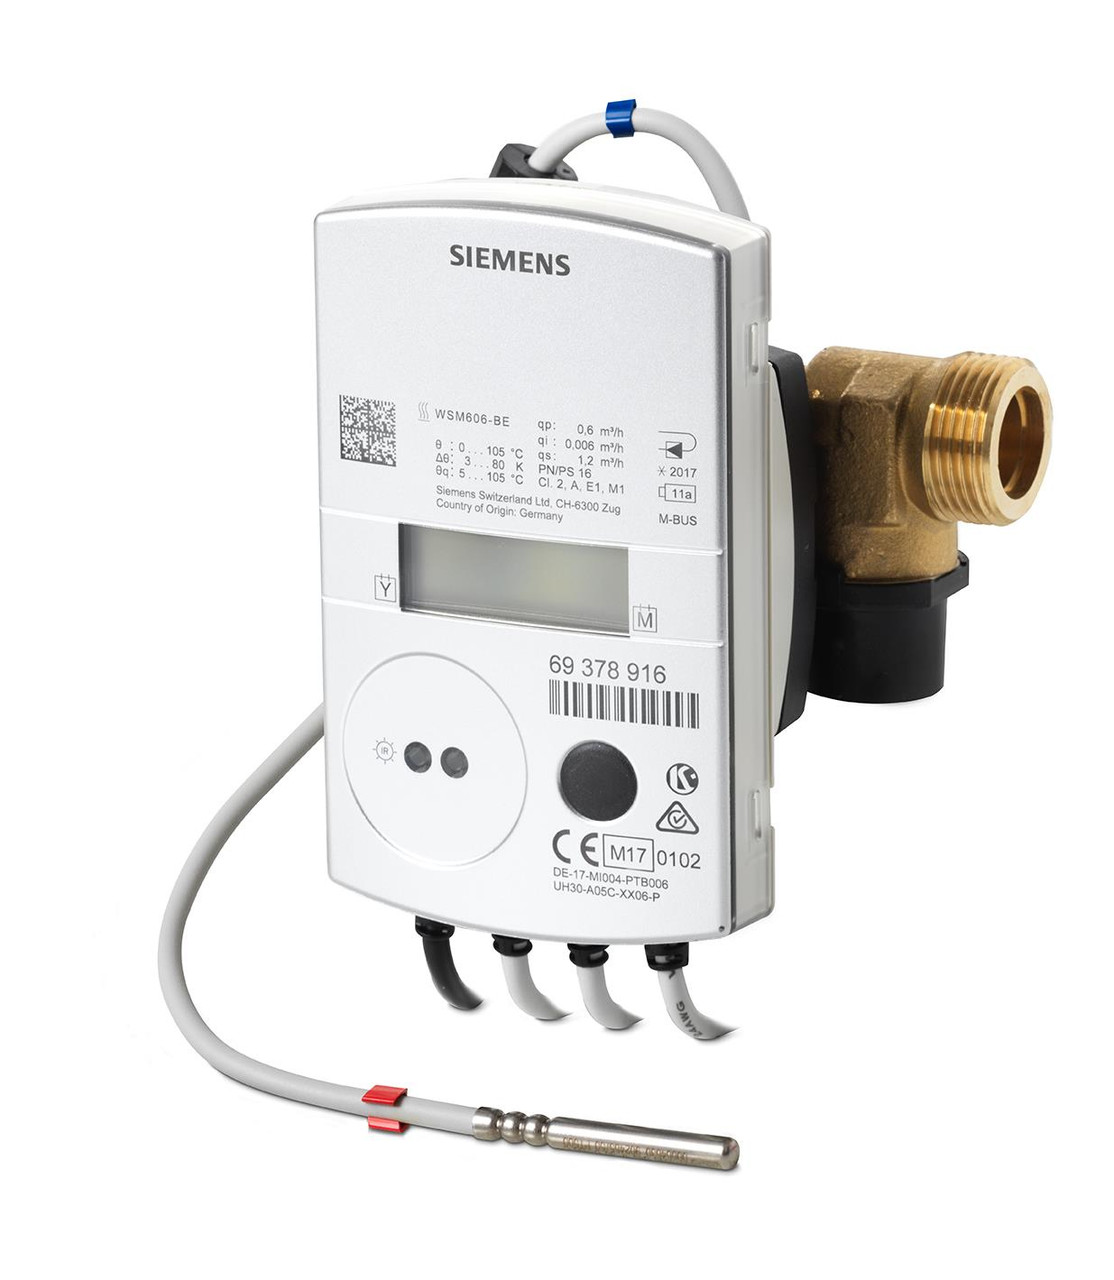 Siemens WSM615-BE Ultrasonic heat meter, S55561-F250